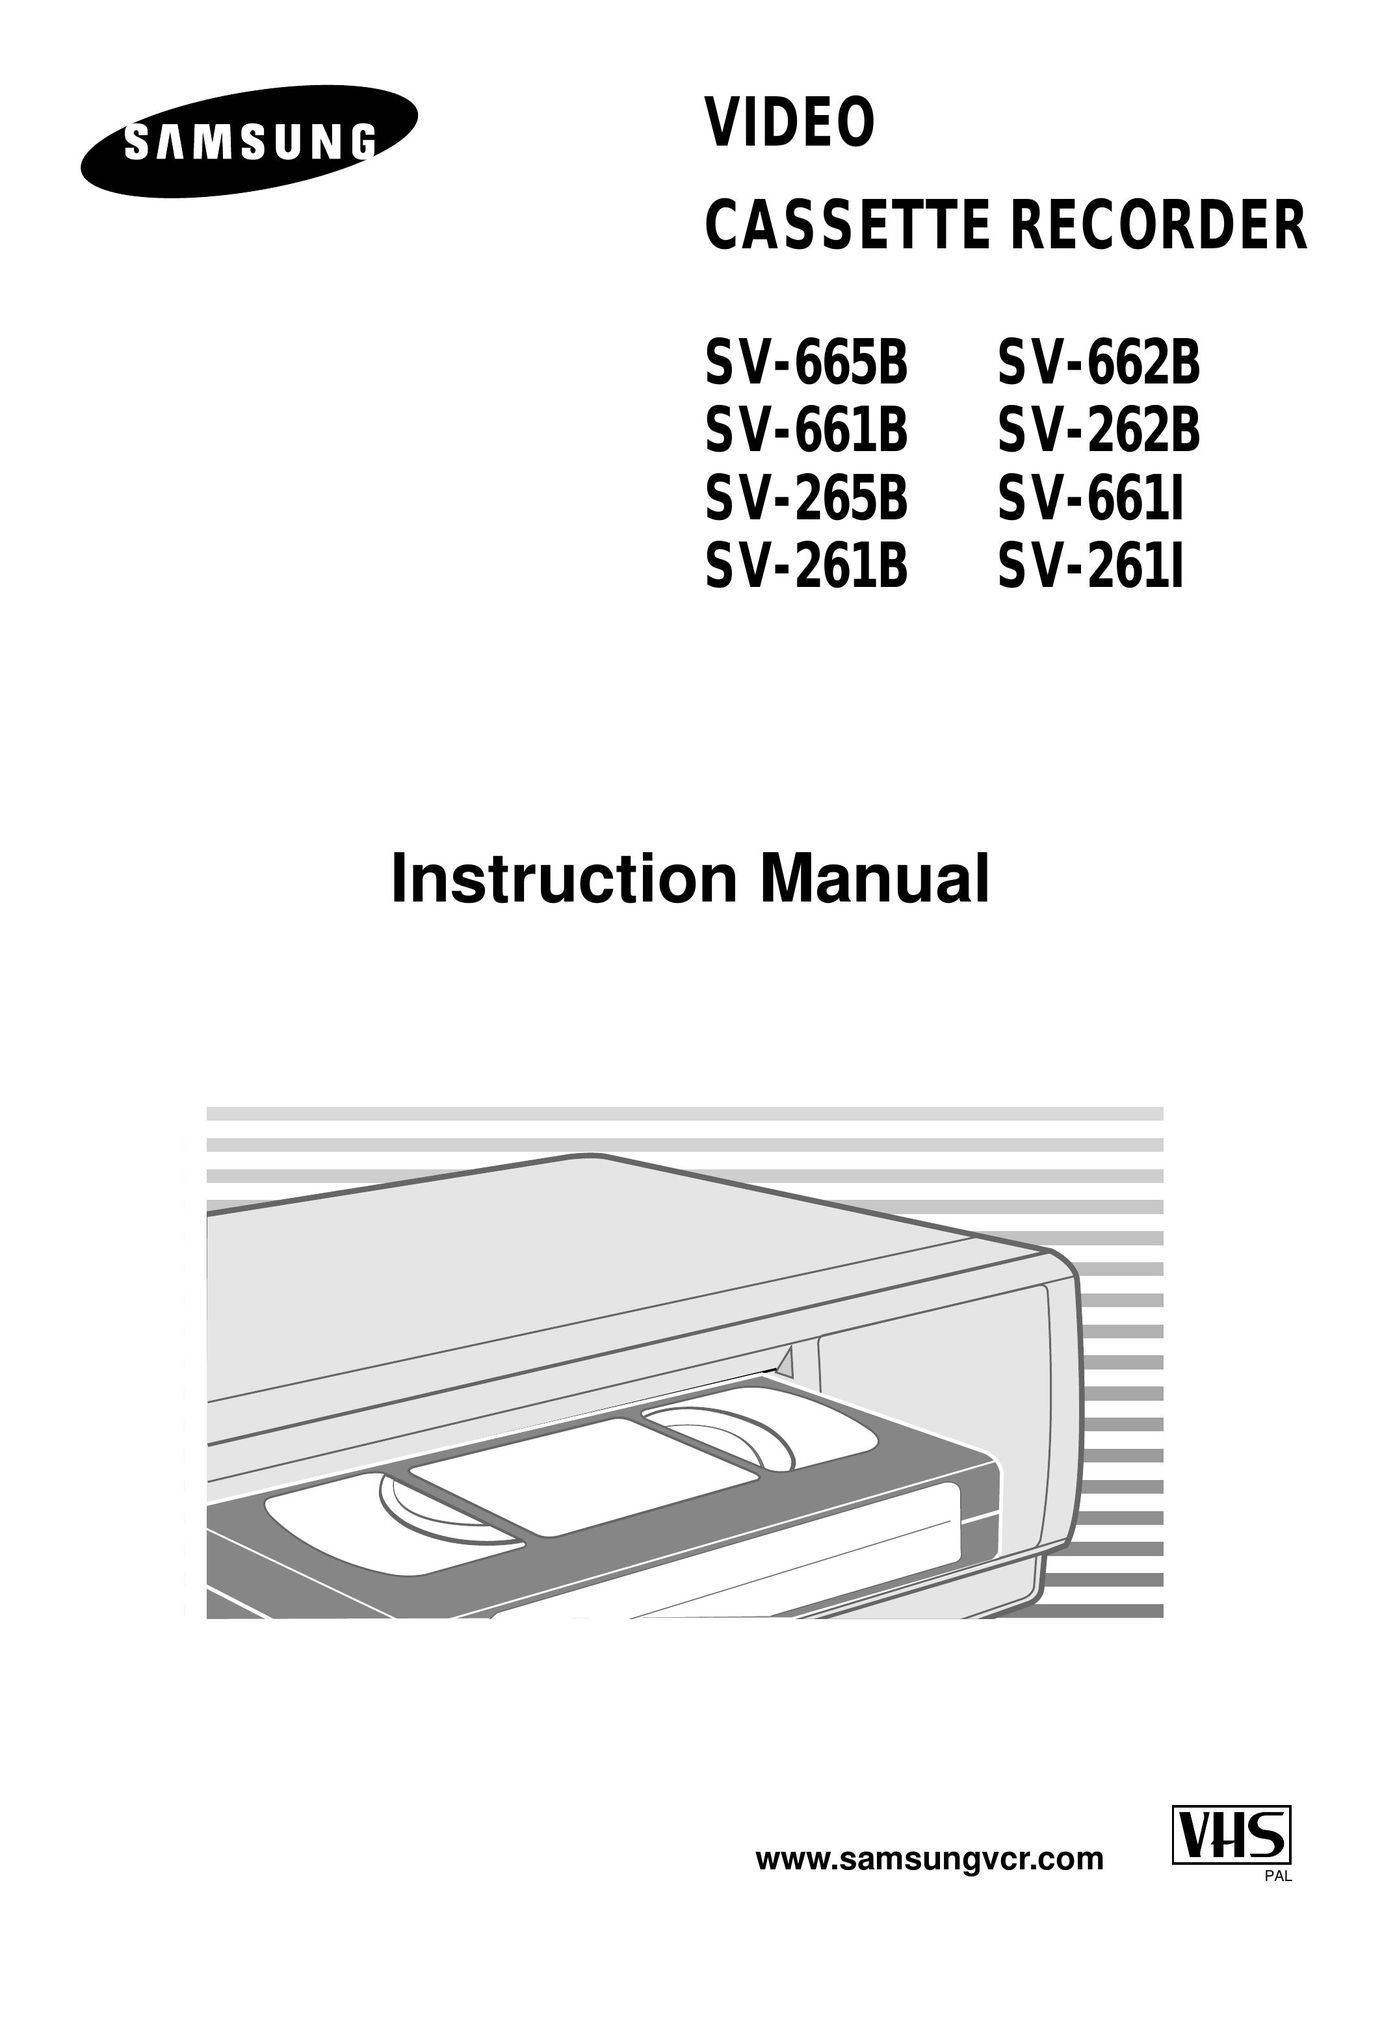 Samsung SV-261B VCR User Manual